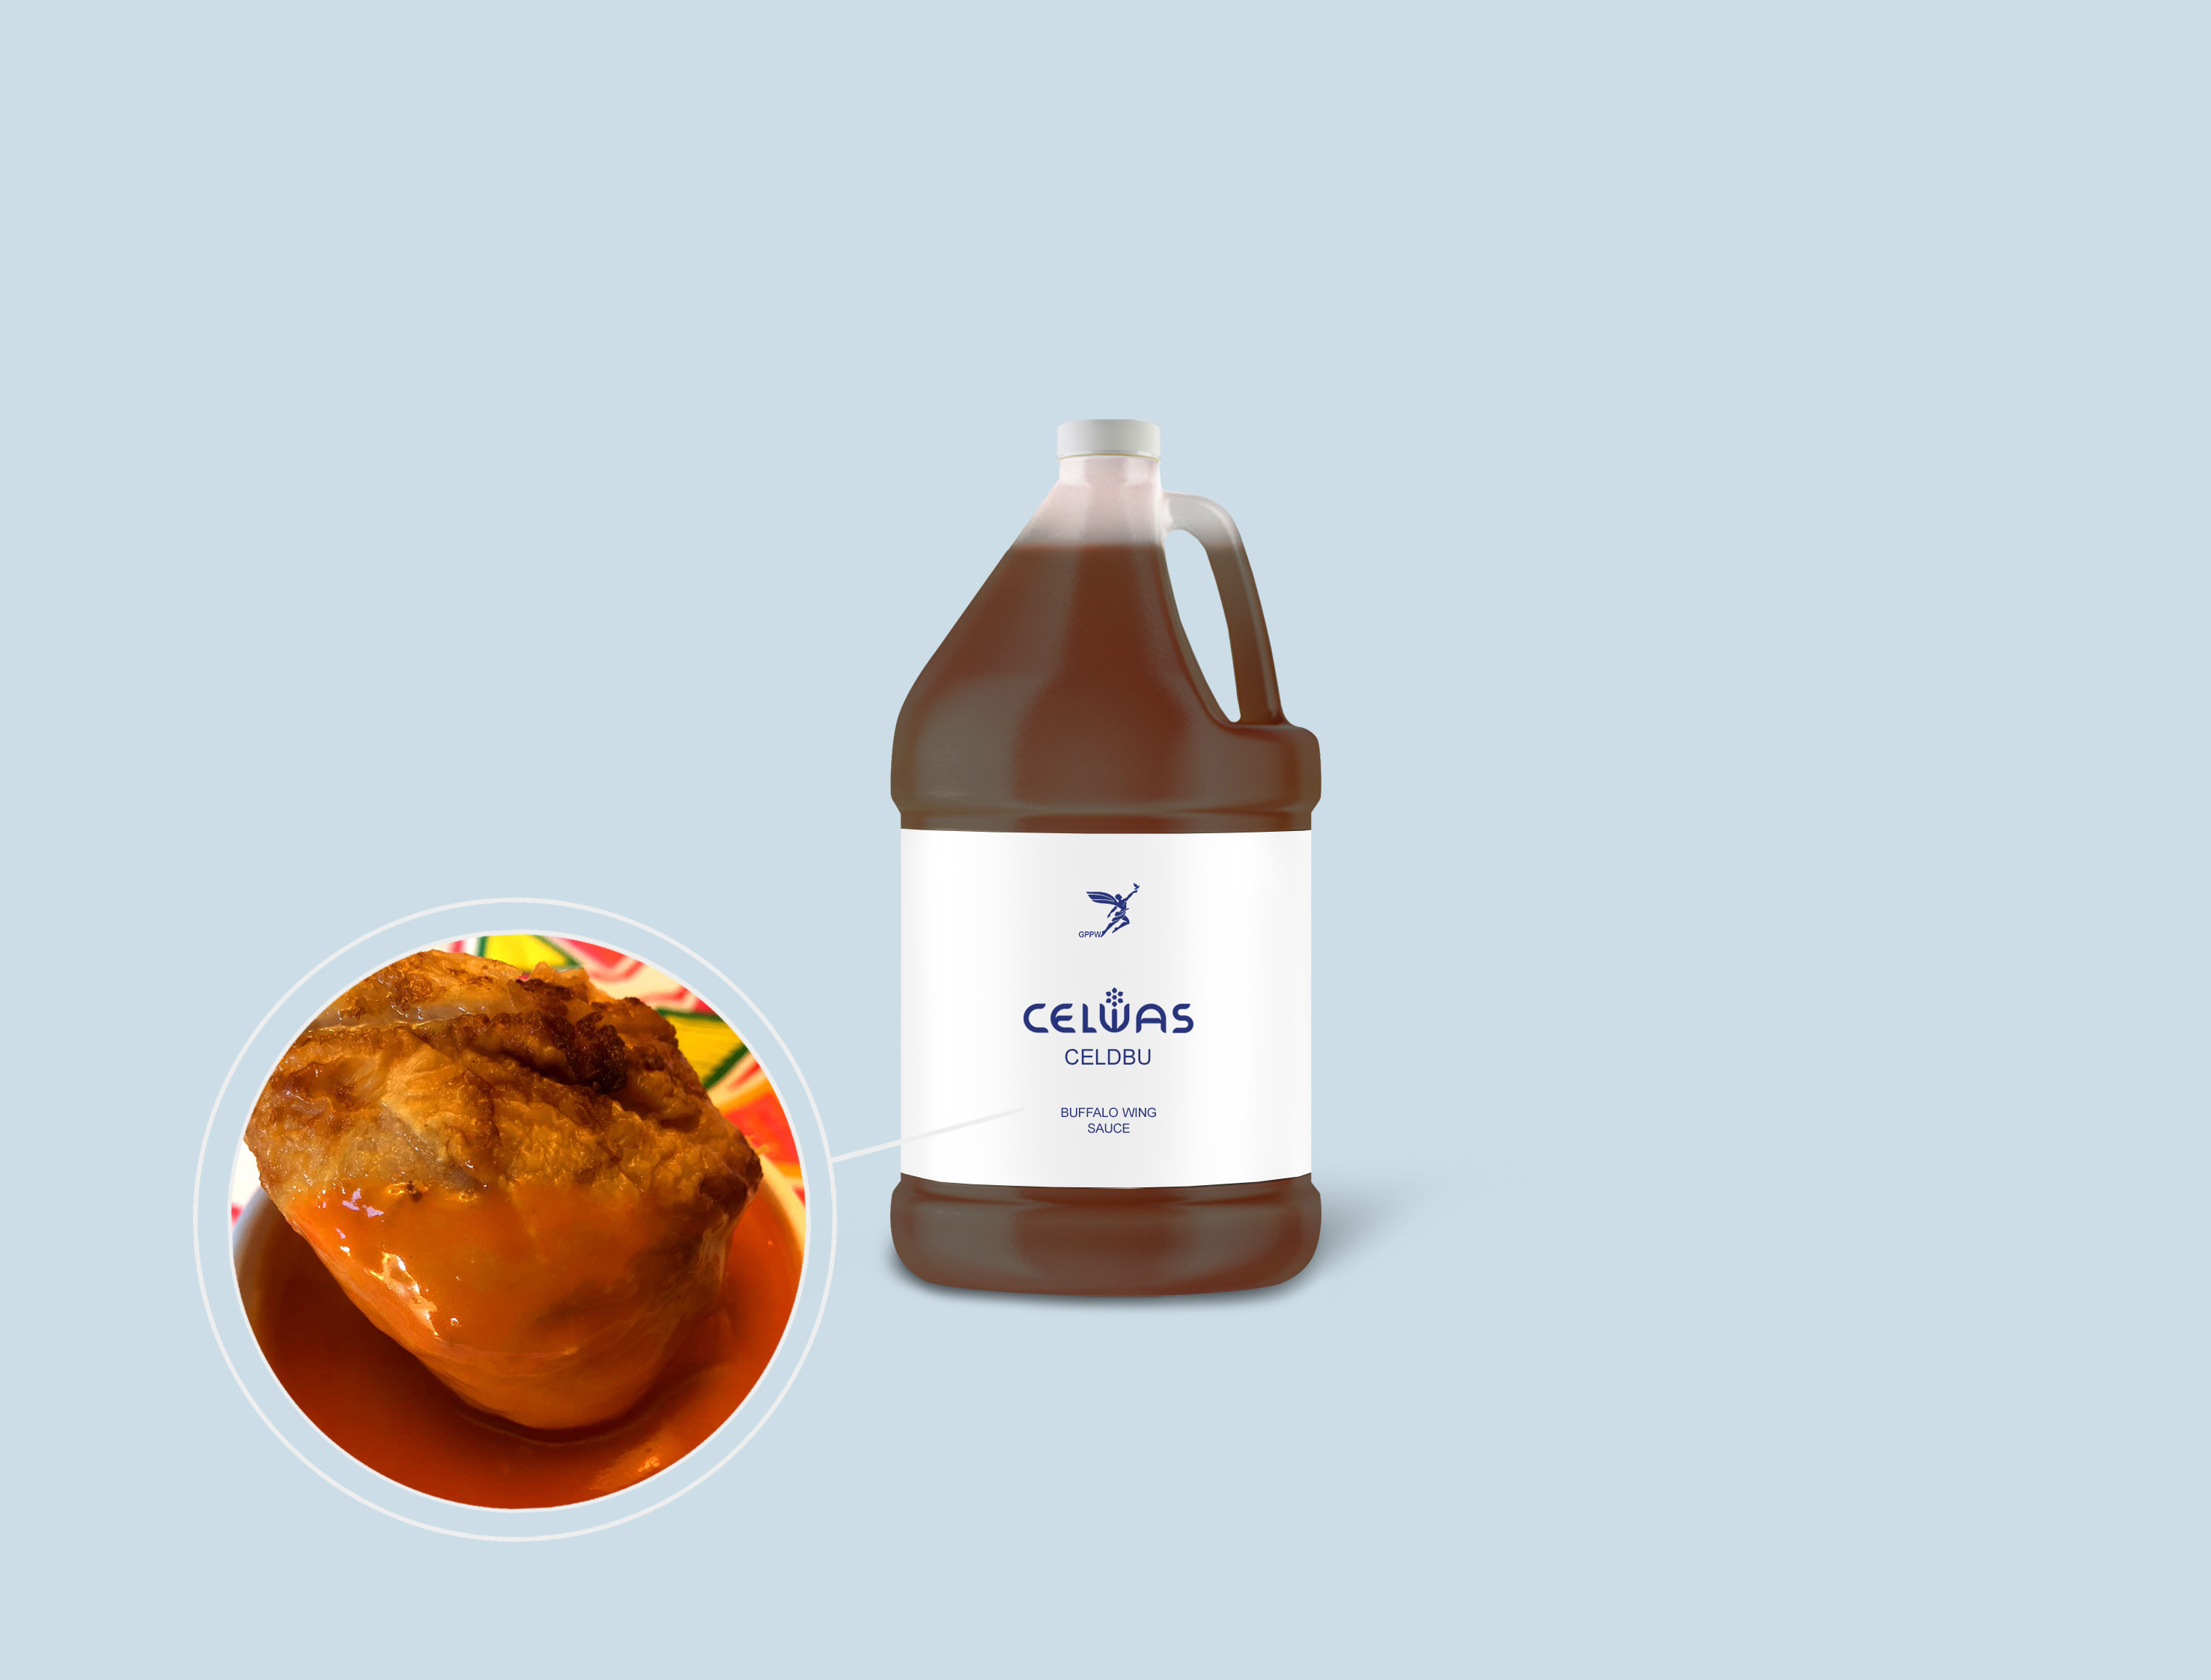 CELDBU<br />buffalo wing sauce